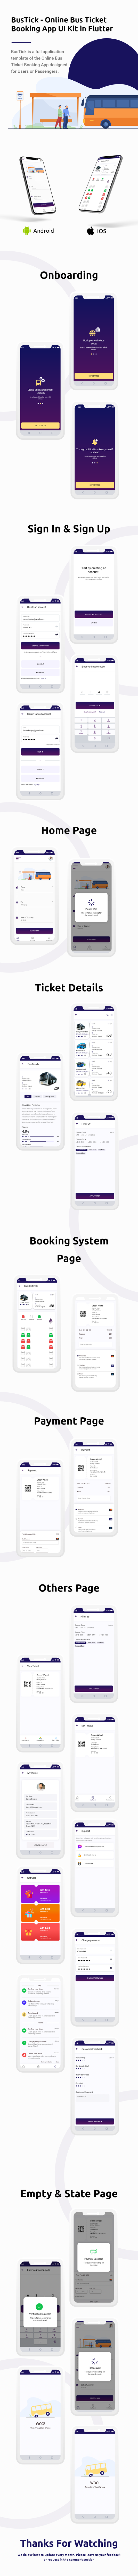 BusTick - Online Bus Ticket Booking App UI Kit in Flutter - 2